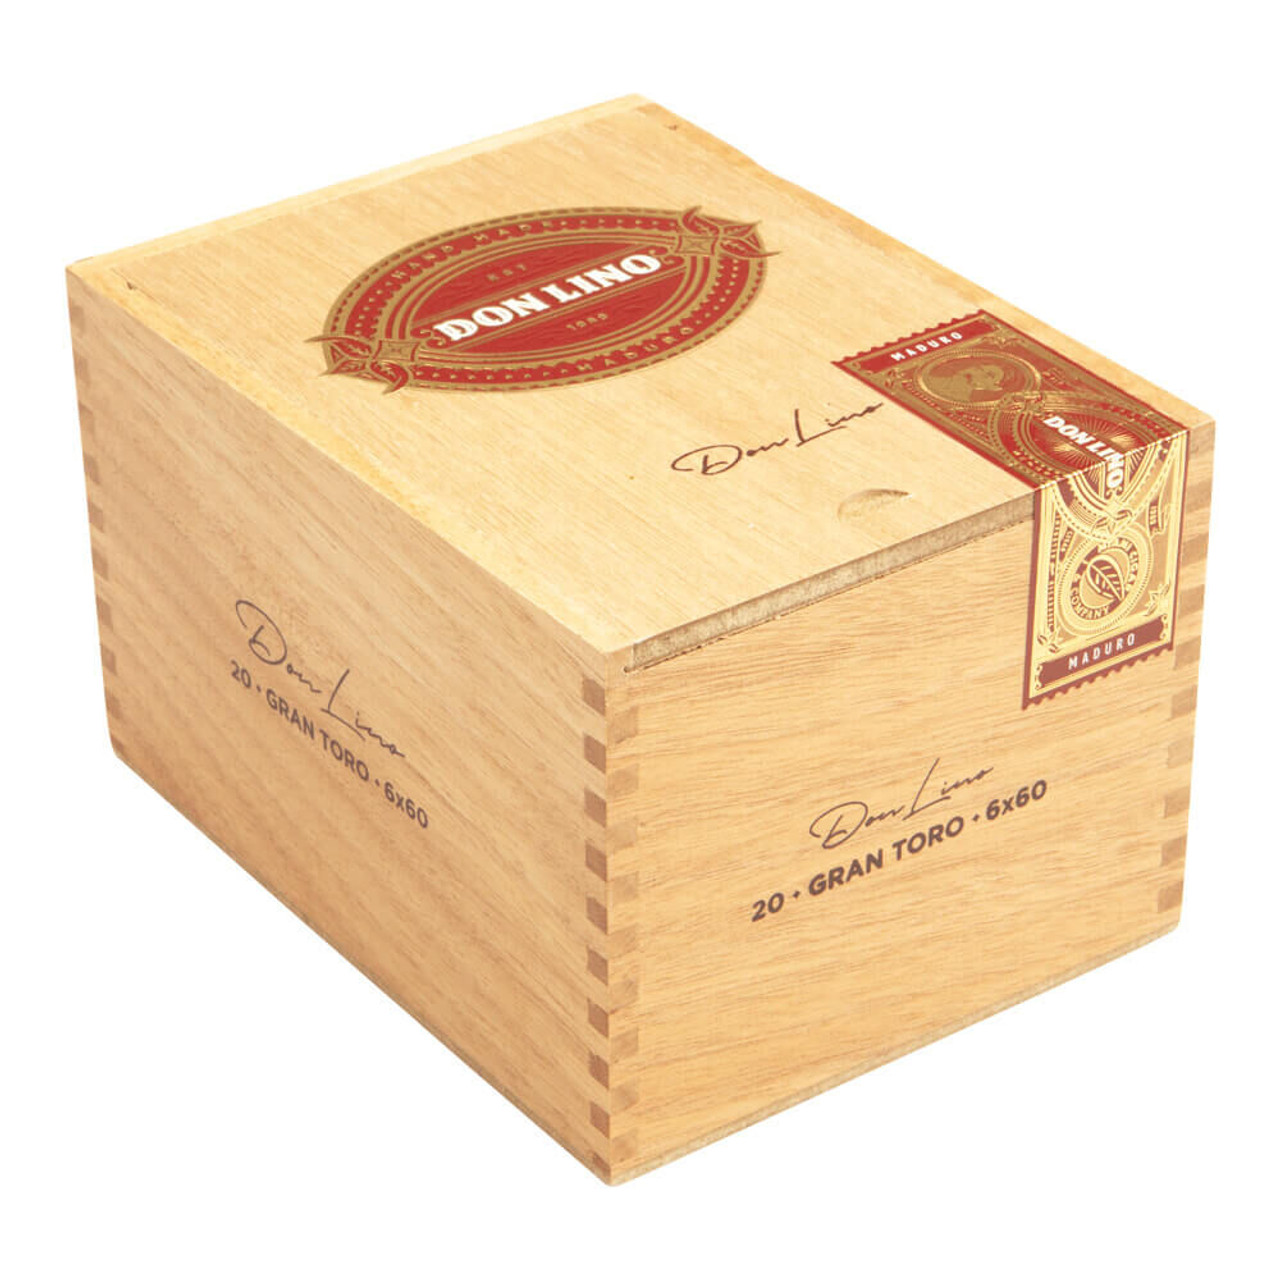 Don Lino Maduro Gran Toro Cigars - 6 x 60 (Box of 20) *Box